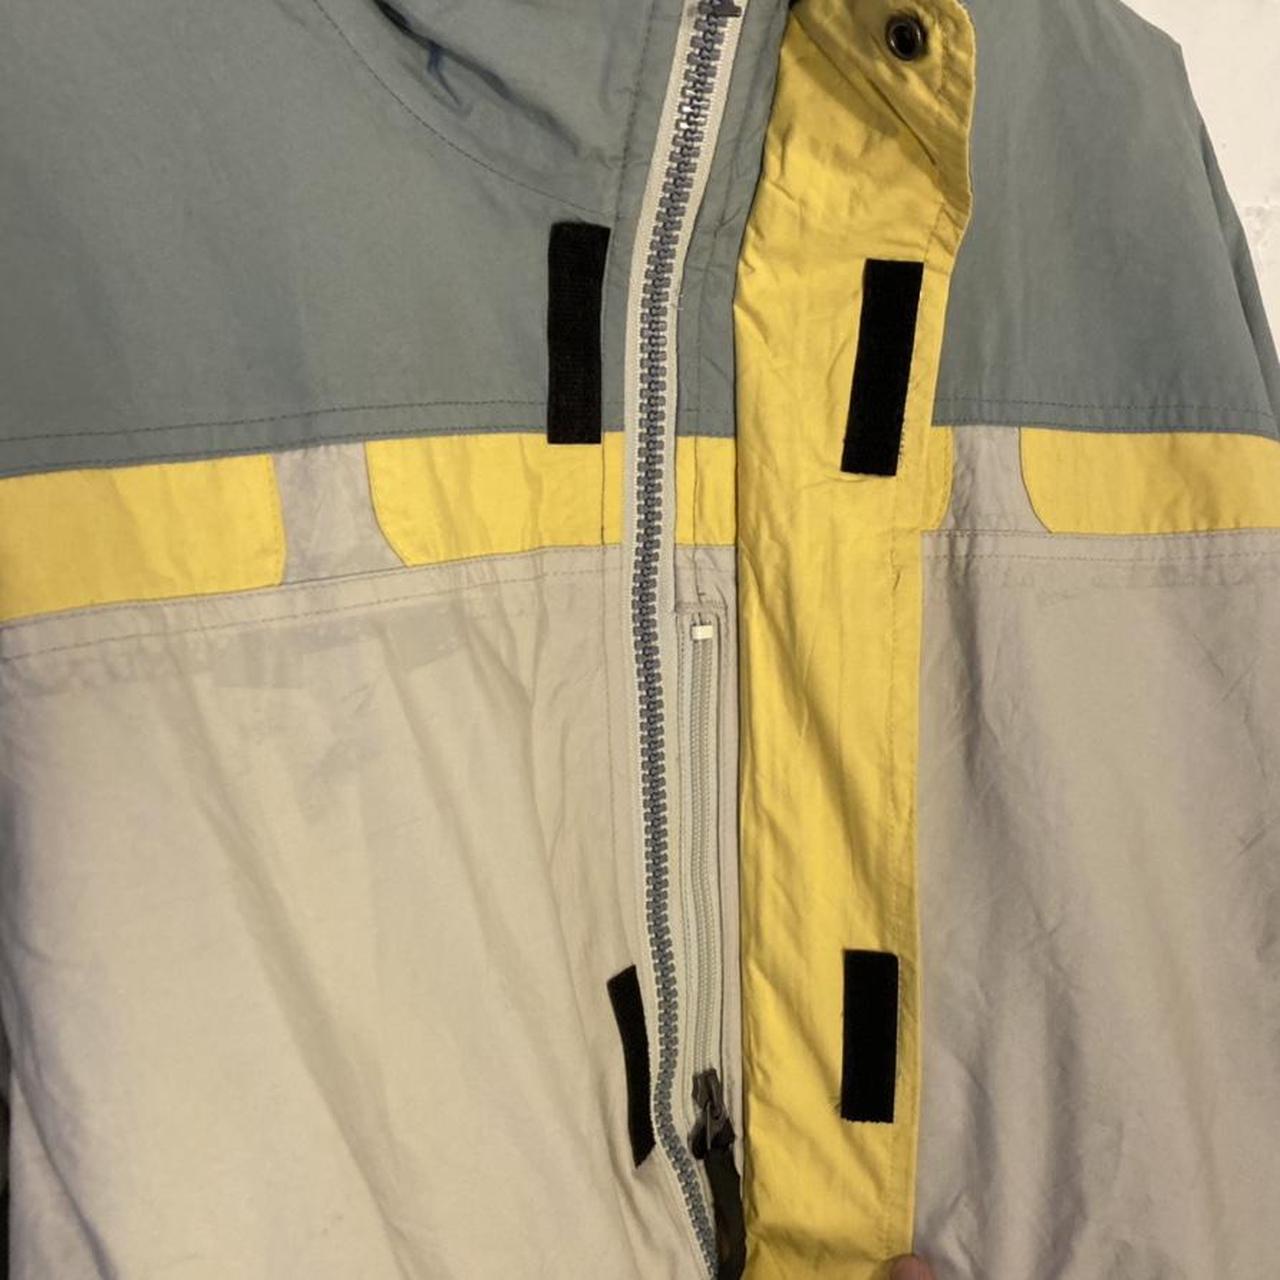 Nike ACG jacket in BlueGrey, yellow and cream. Size... - Depop